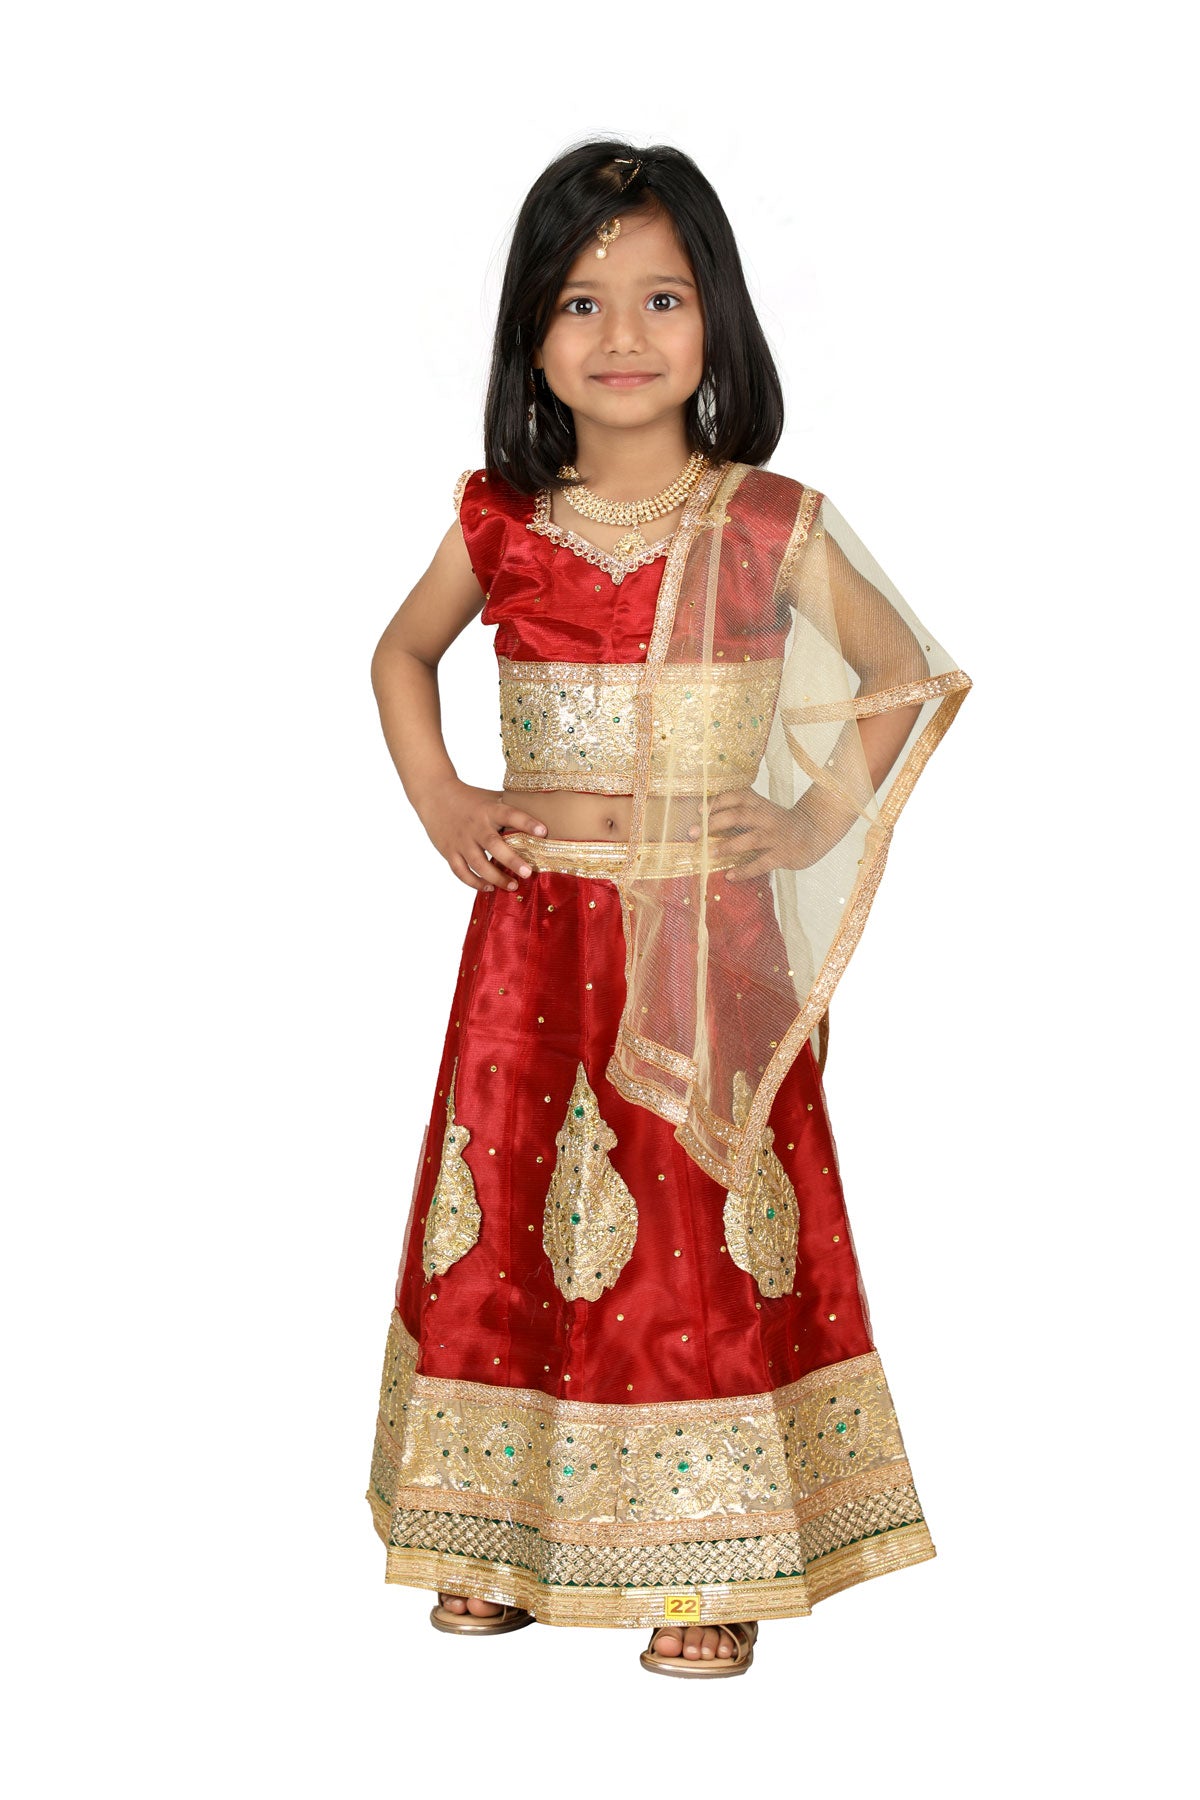 Sarvda Radha Rani Costume For Girls Lehenga Dupatta With Mala, Kundal,  Mukut, Morpankh | Kids Cosplay,